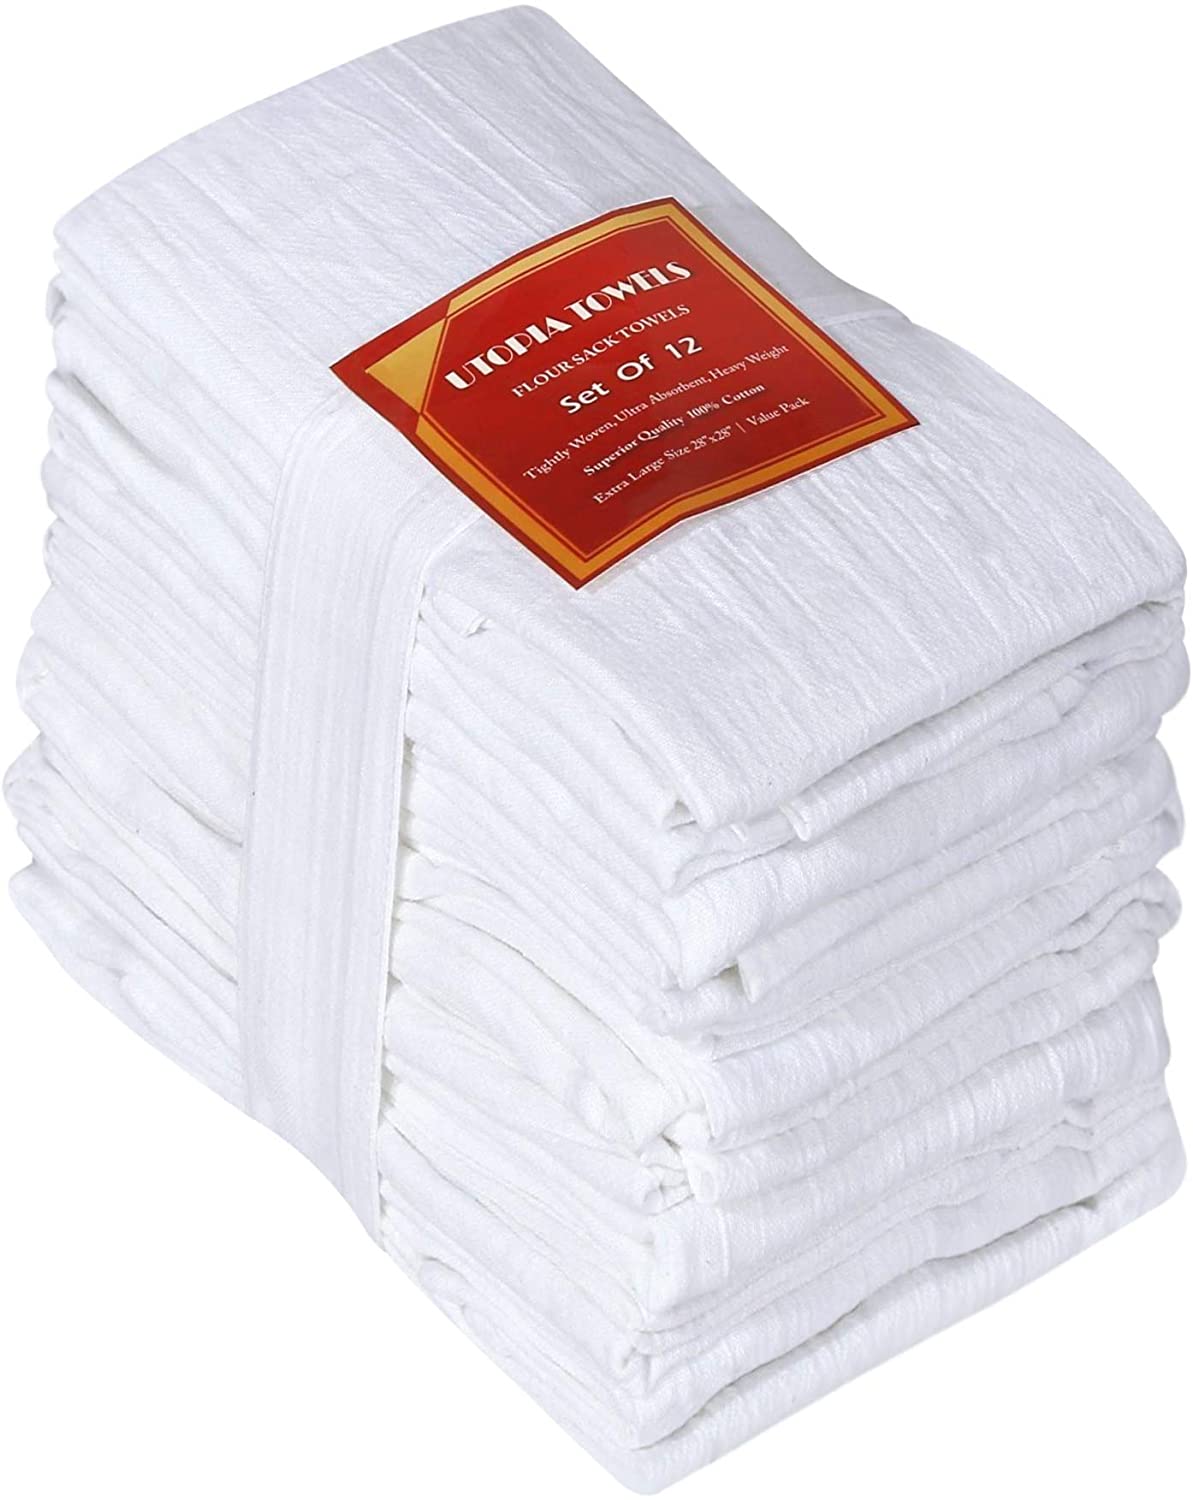 Classic Flour Sack Towels, 28x29 in. – Linteum Textile Supply